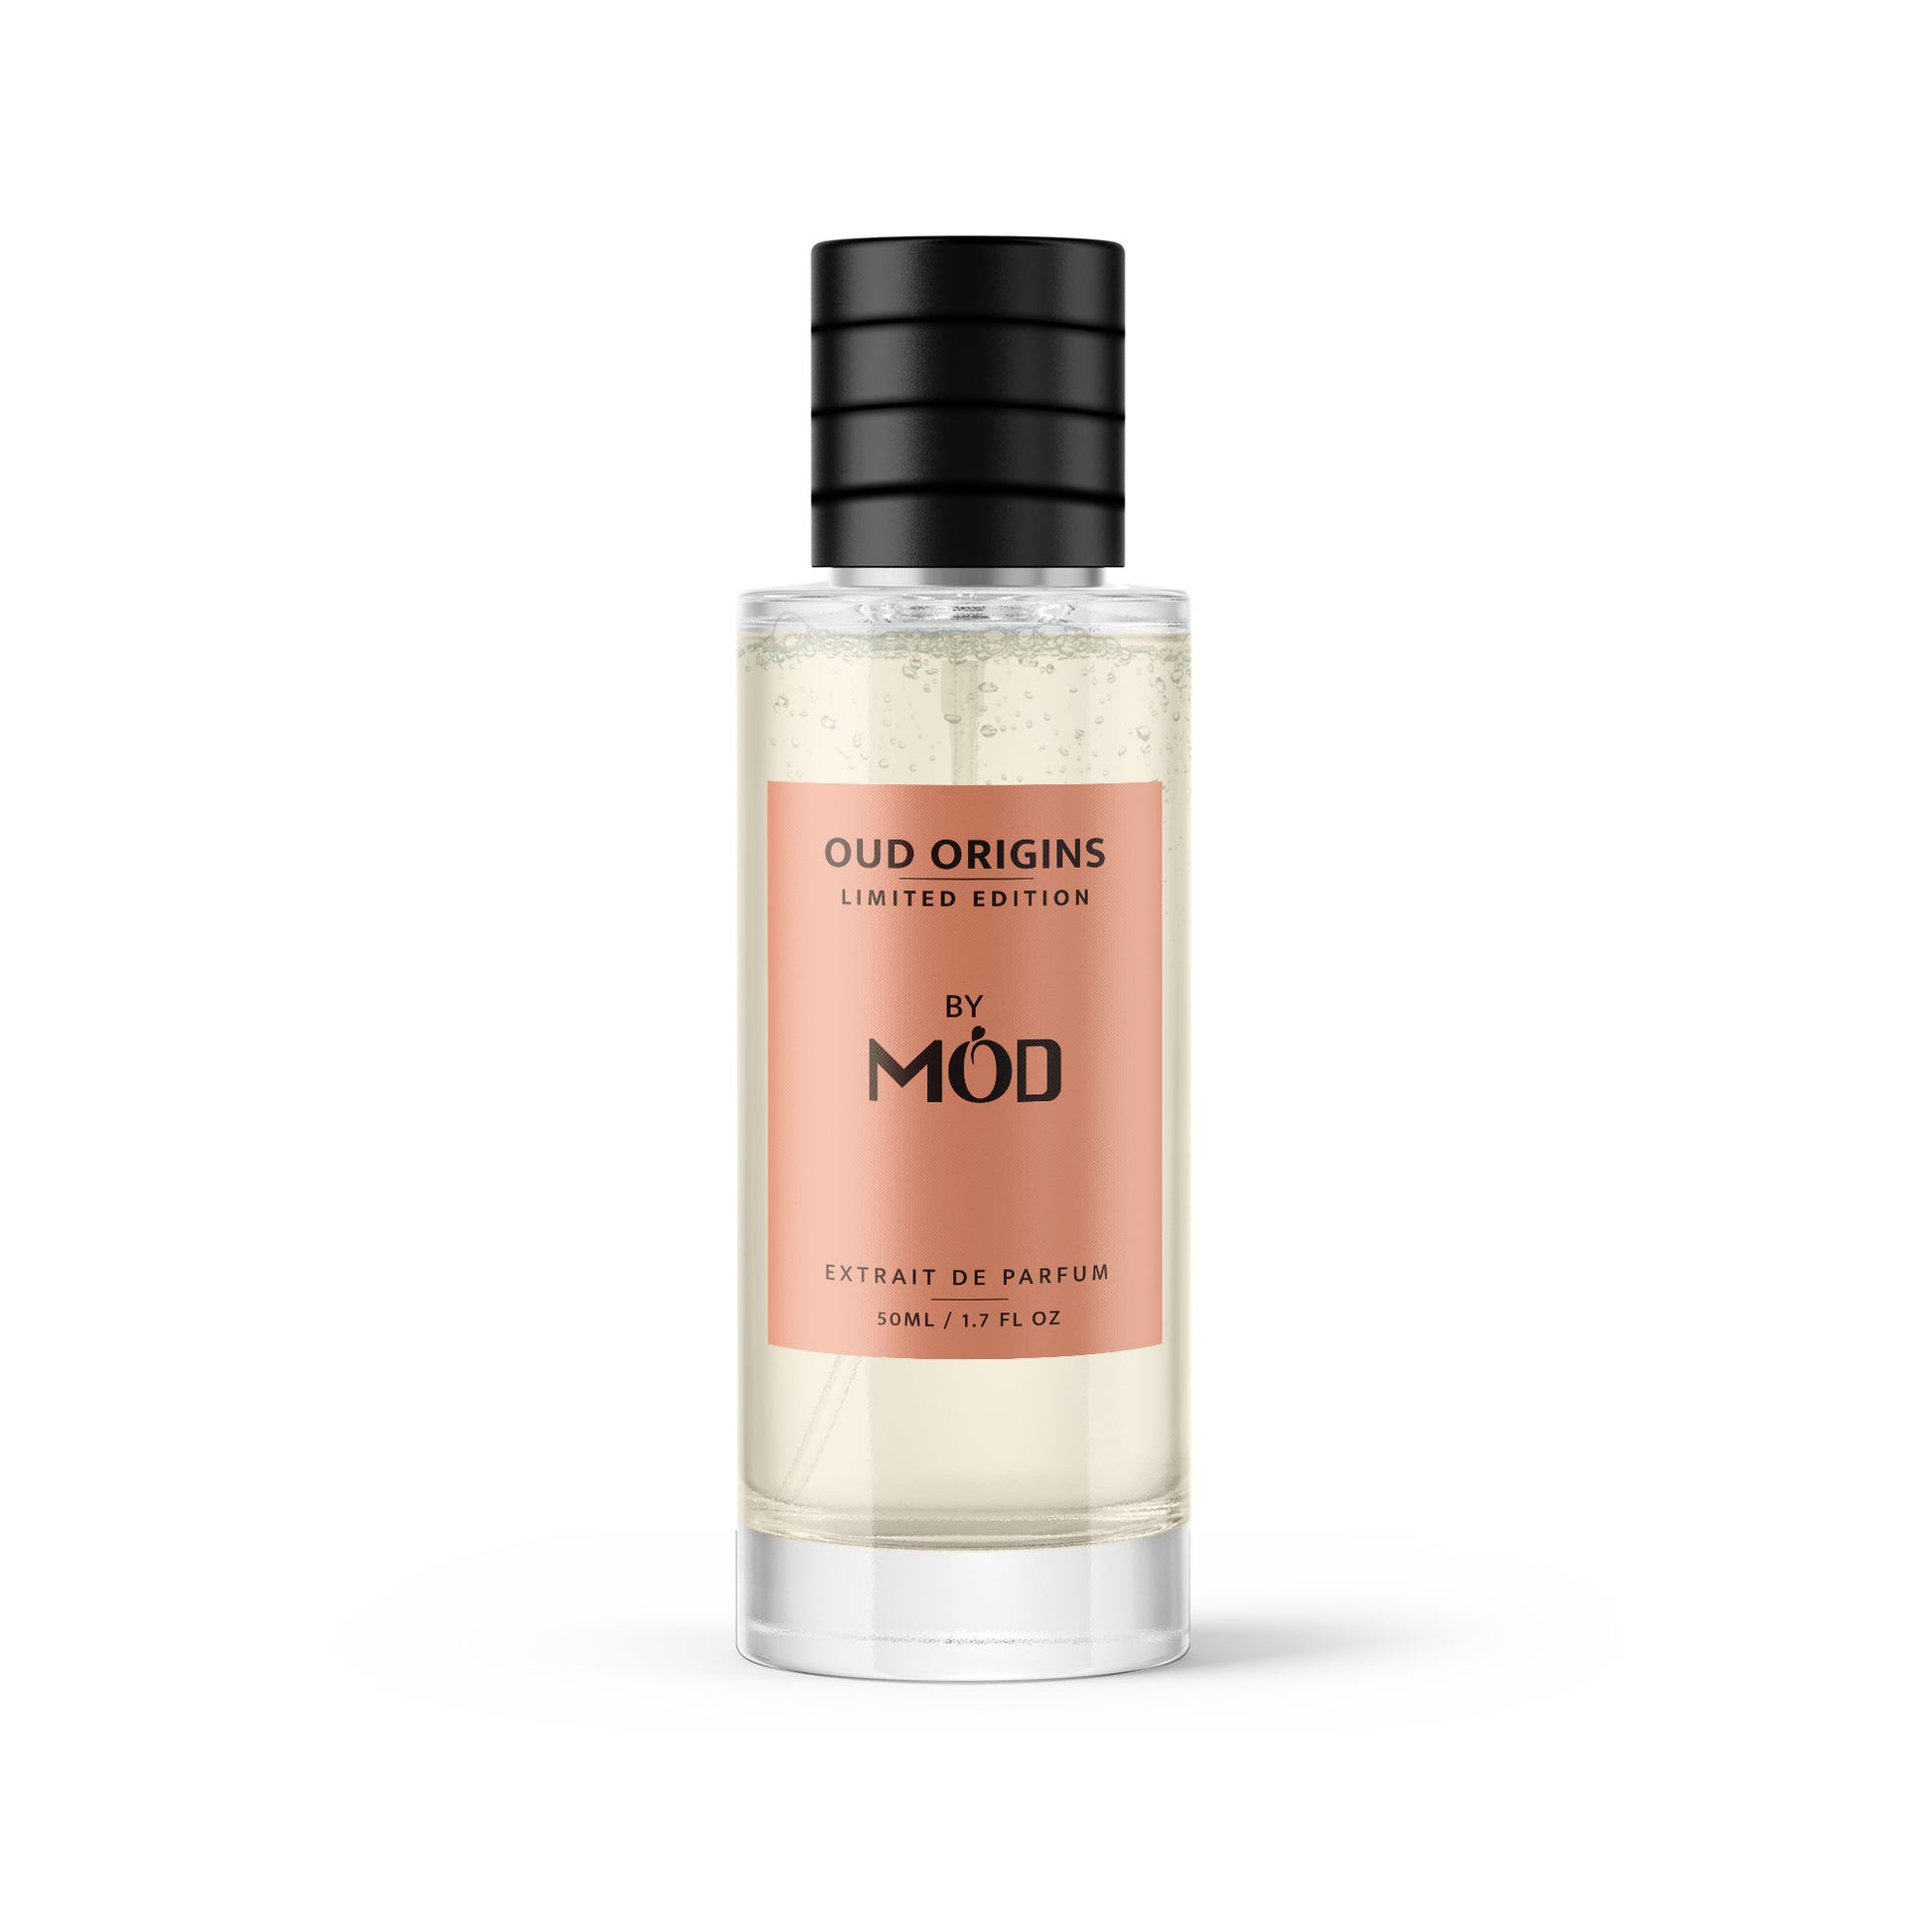 Oud Origins - Limited Edition - Mod Fragrances